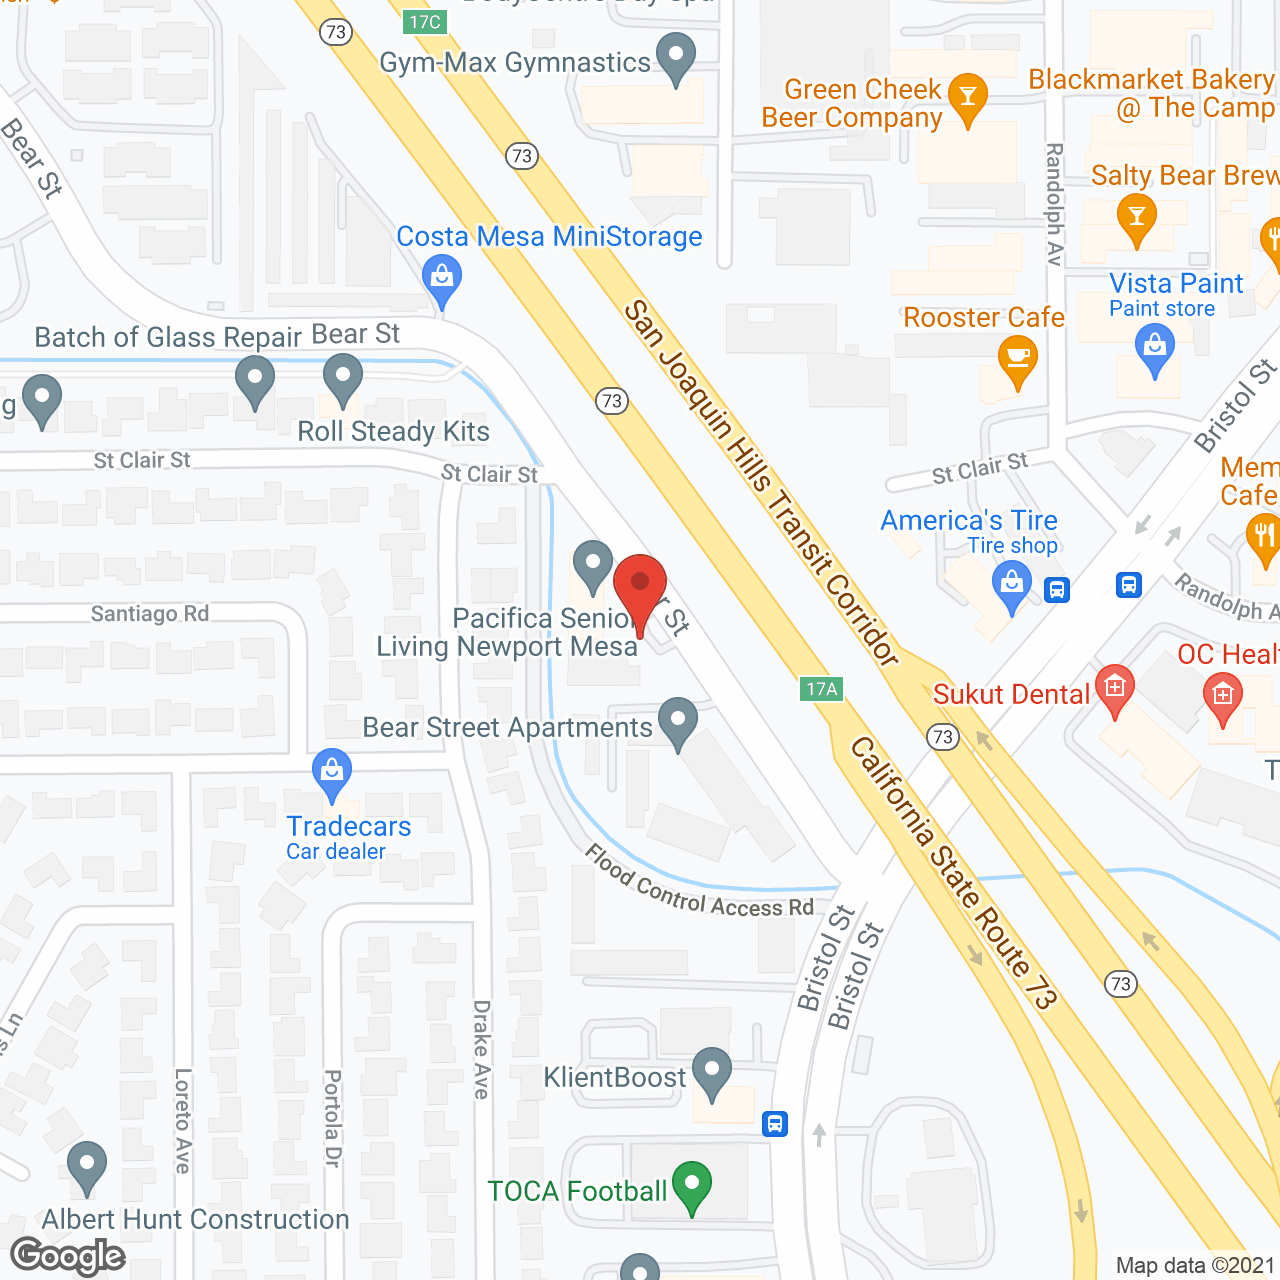 Pacifica Senior Living Newport Mesa in google map